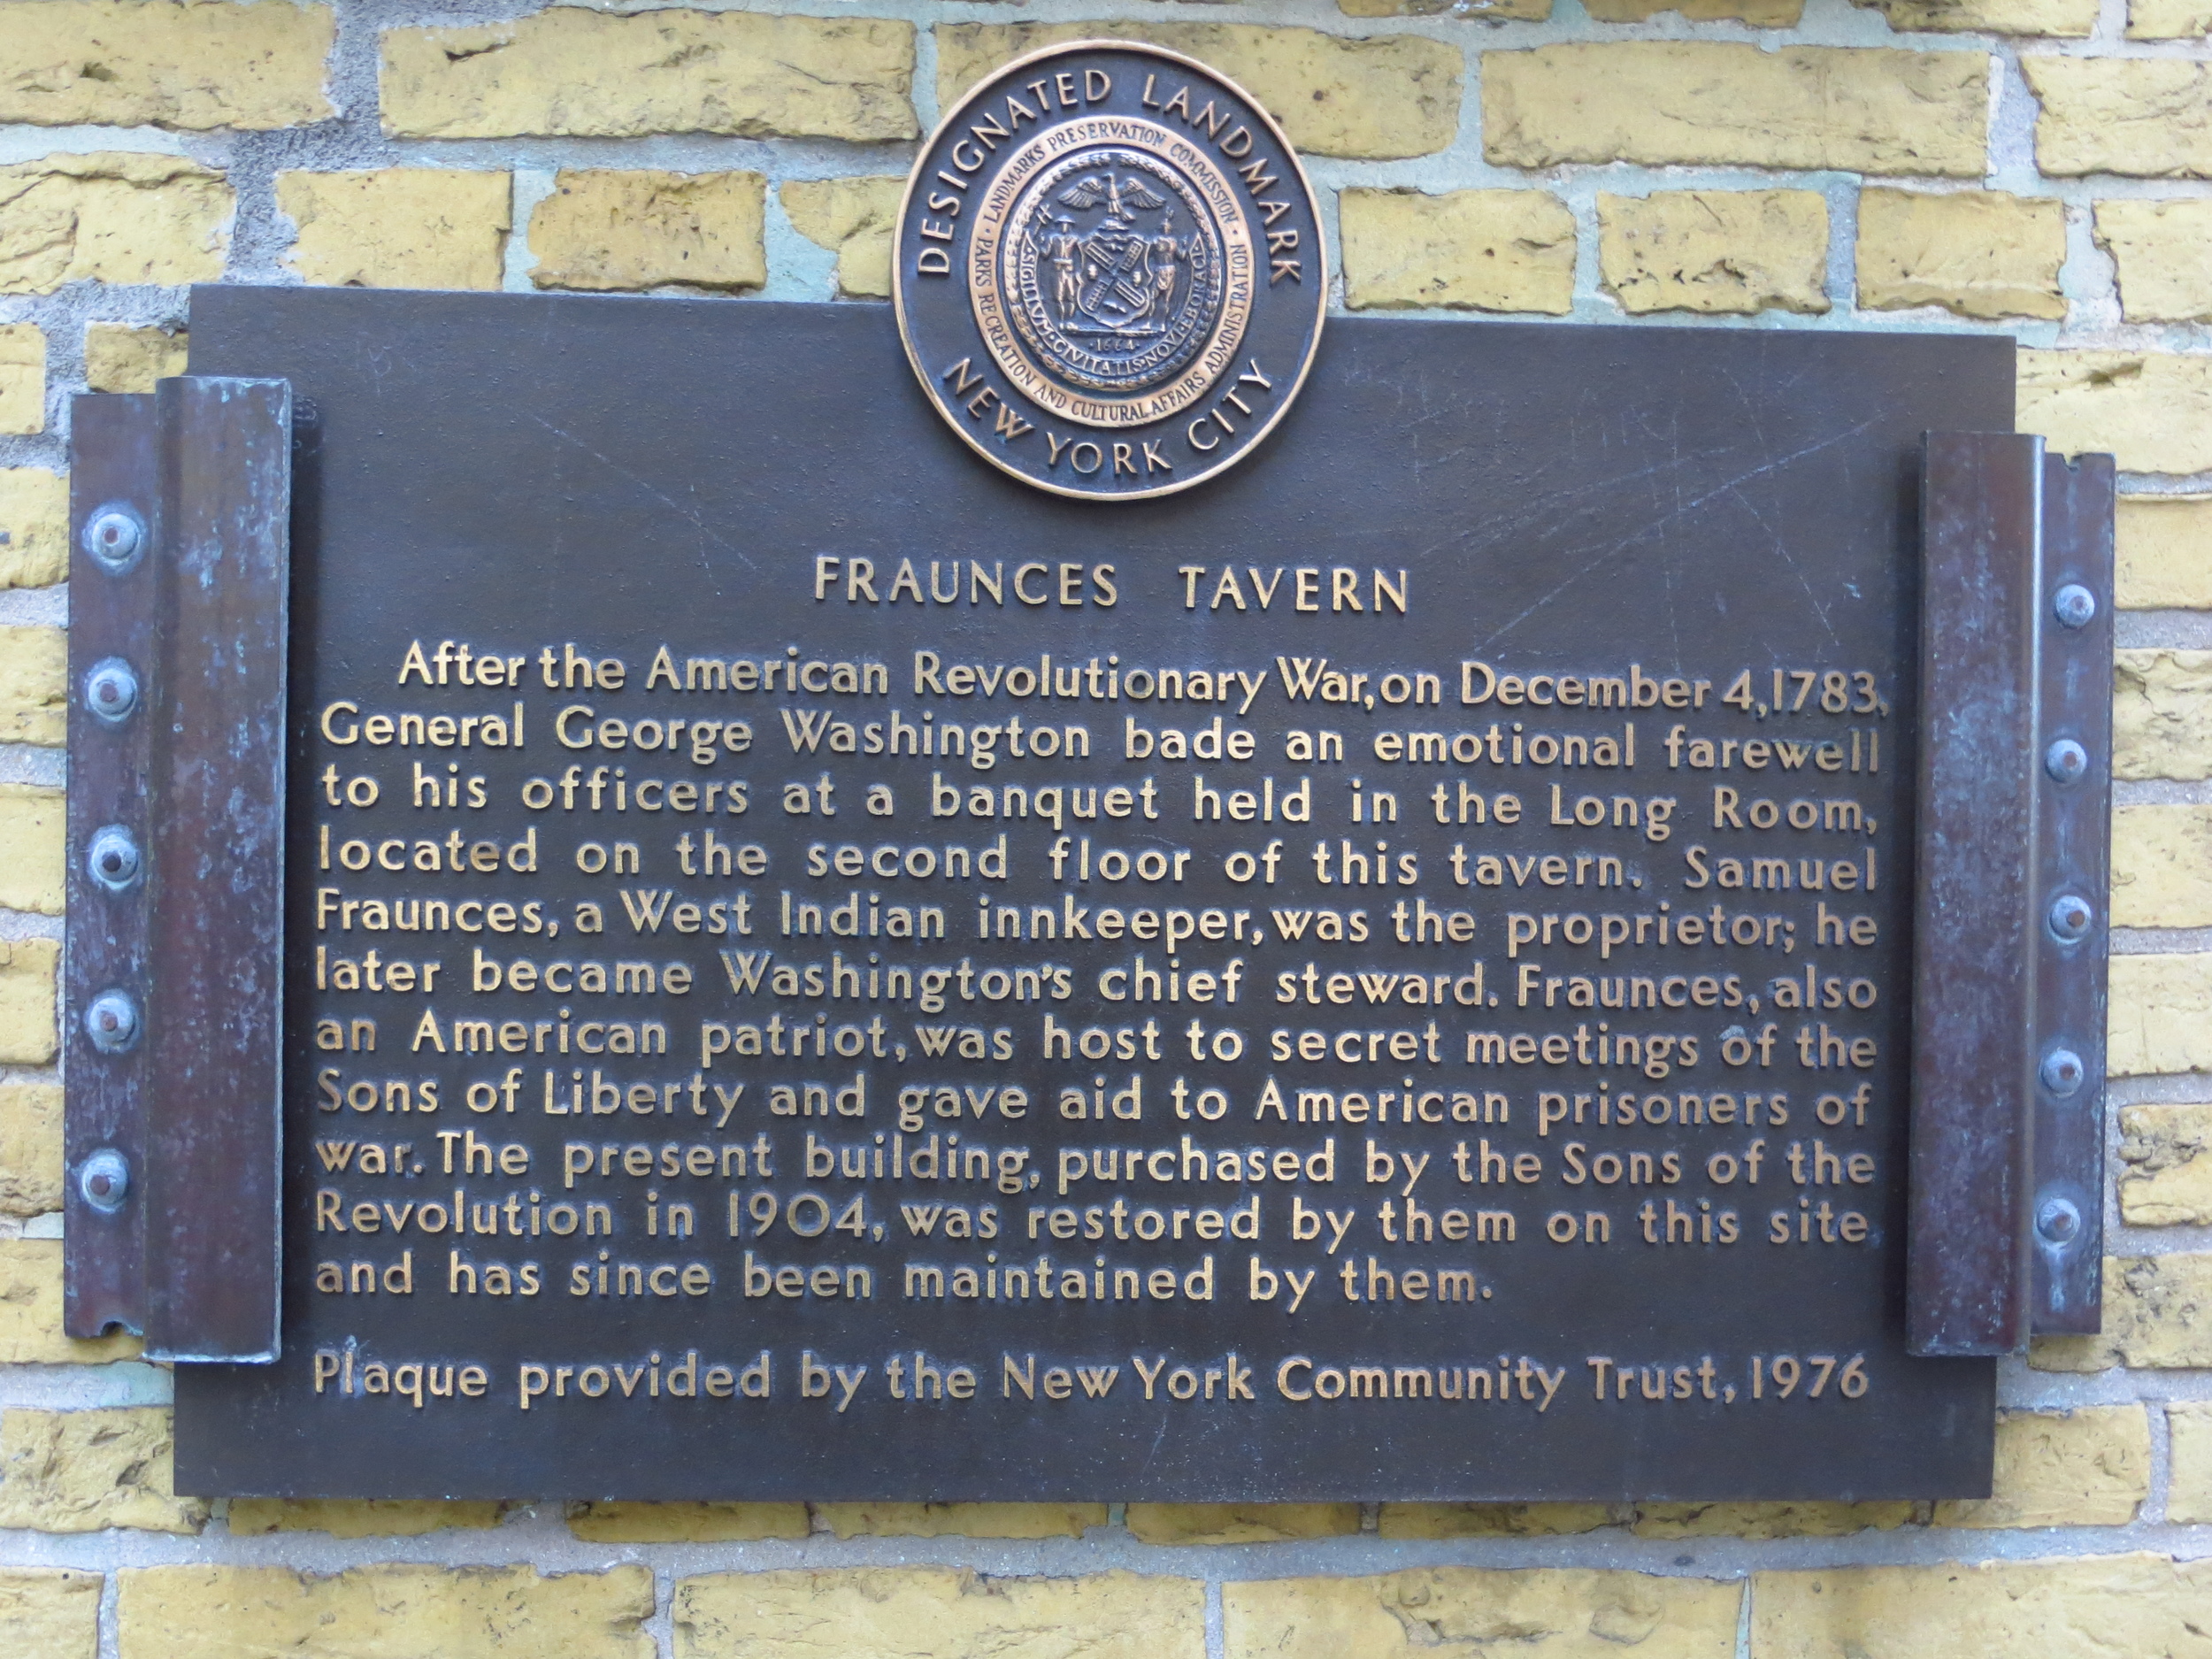 Fraunces Tavern history